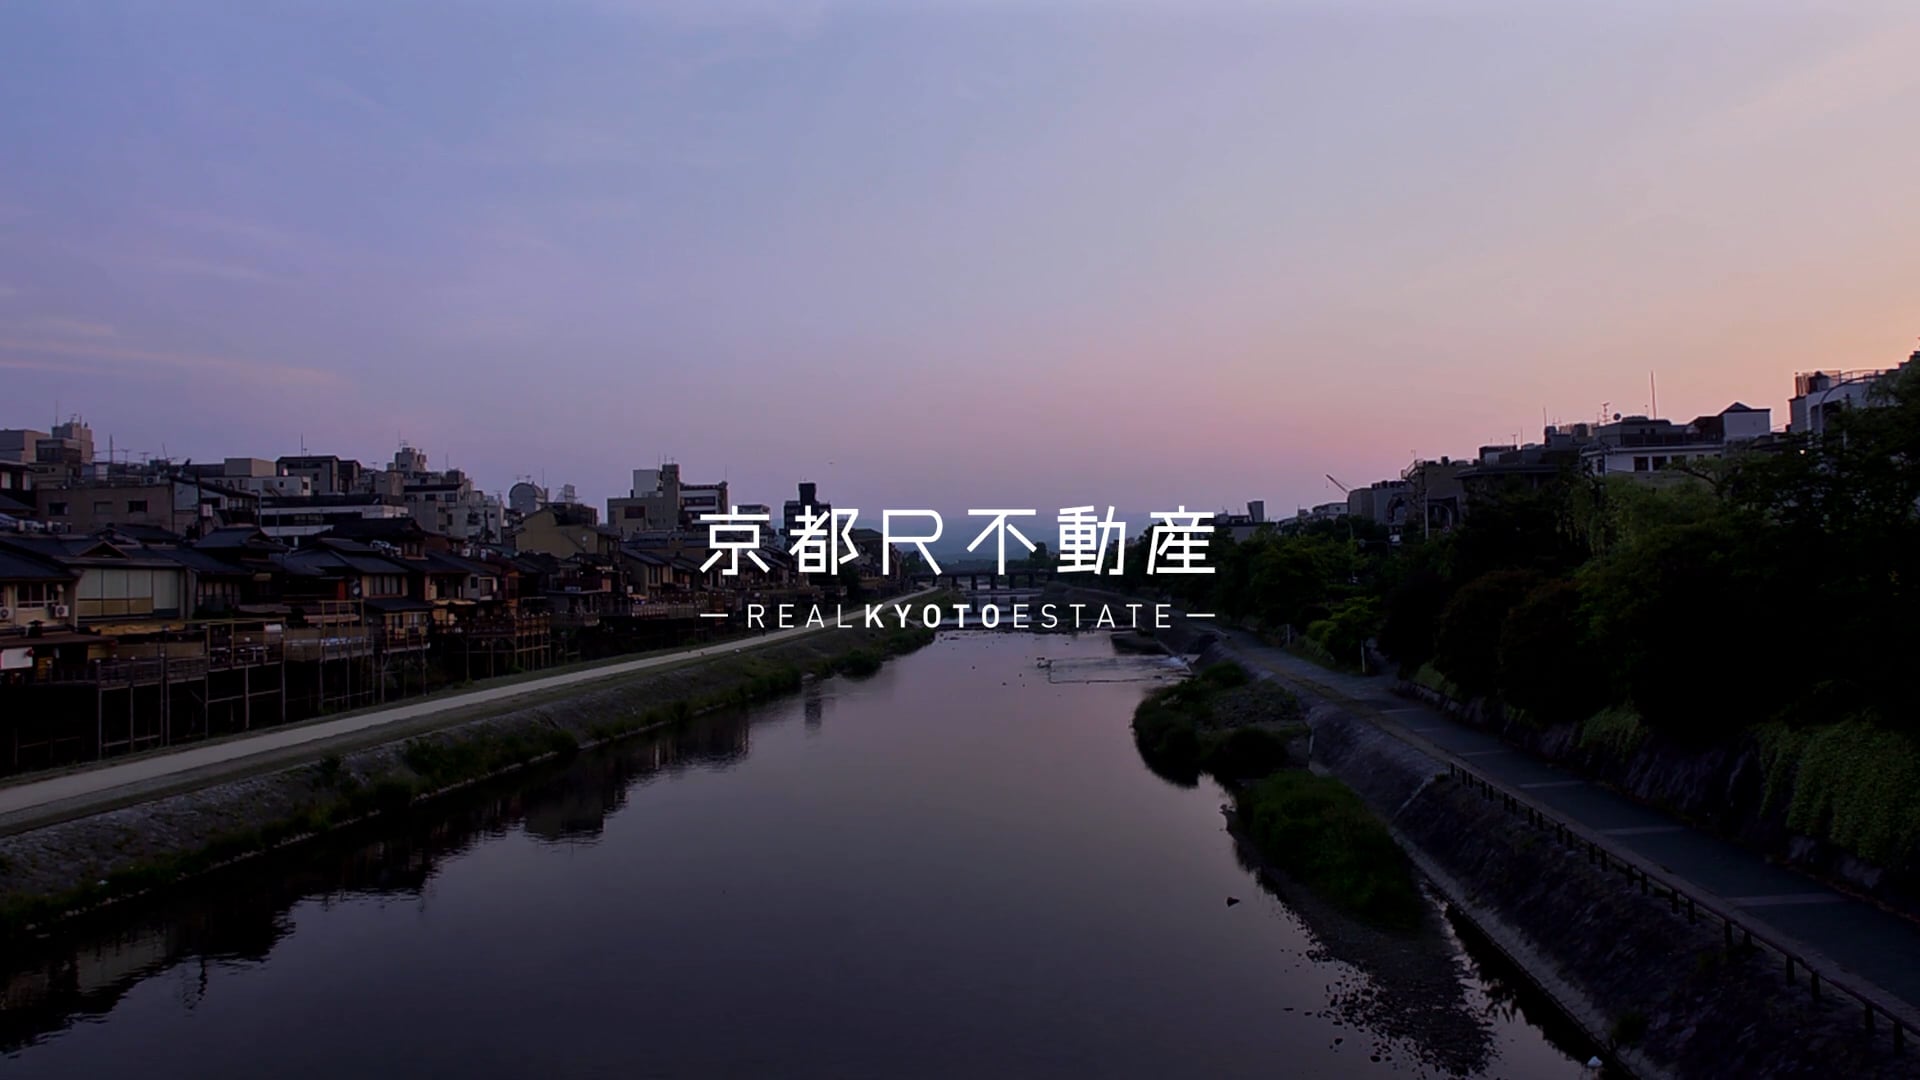 Real Kyoto Estate 京都R不動産 Concept Movie